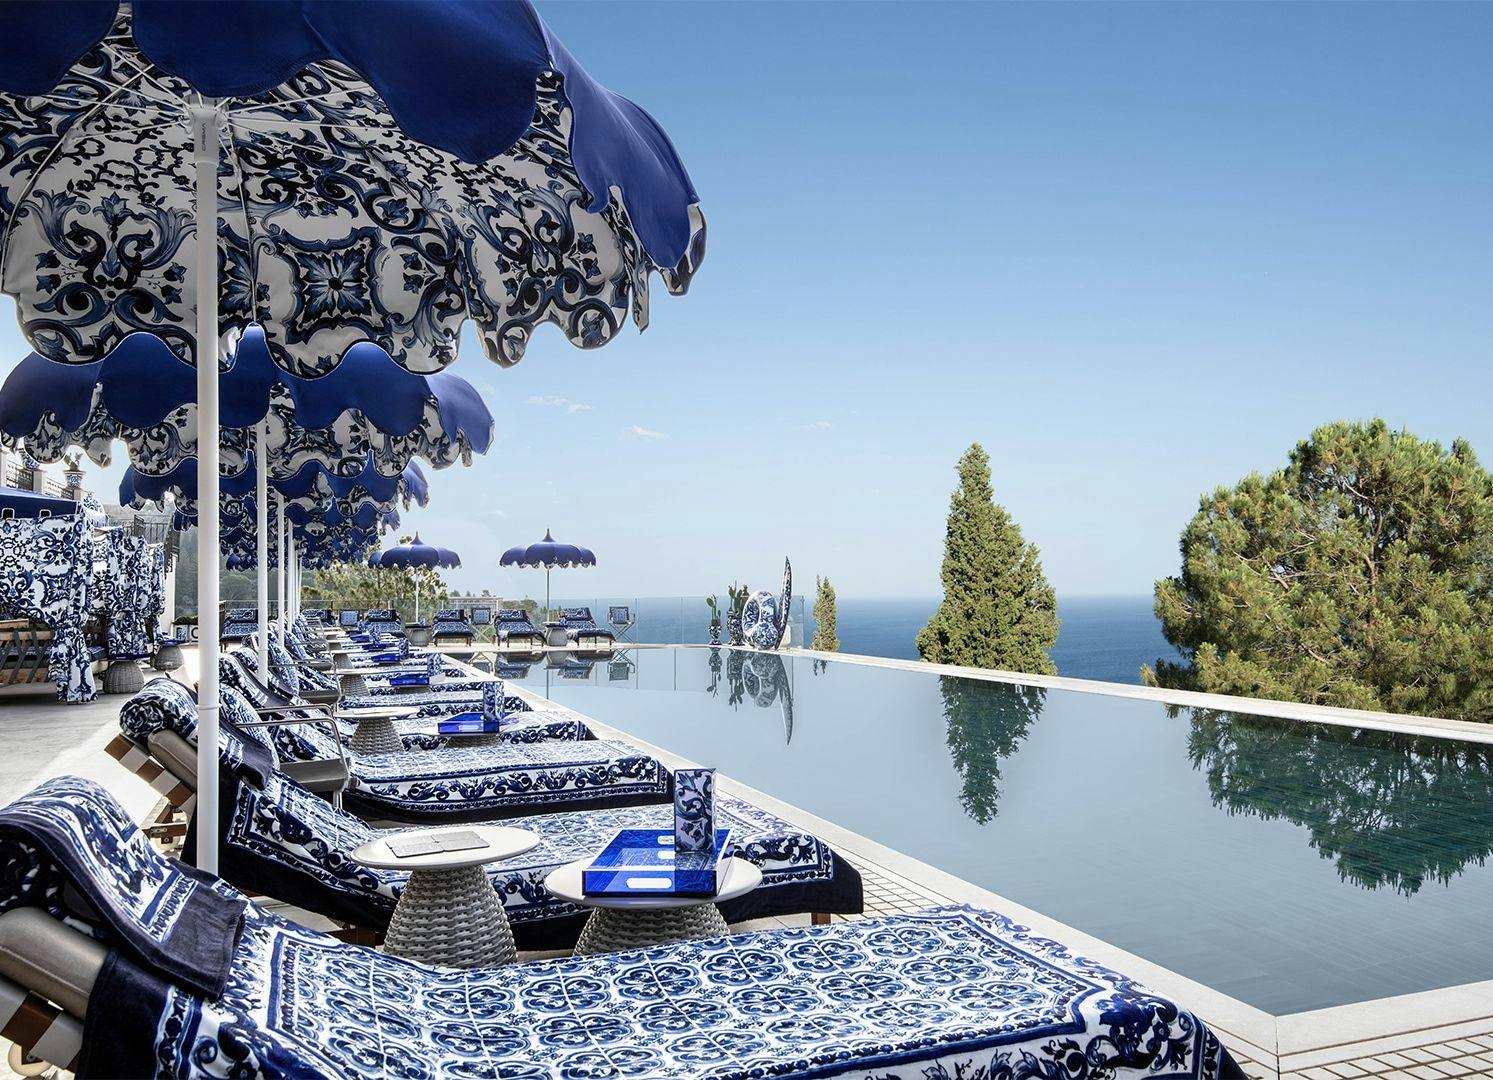 Large infinity pool with Dolce & Gabbana branded sun loungers in Taormina San Domenico resort.